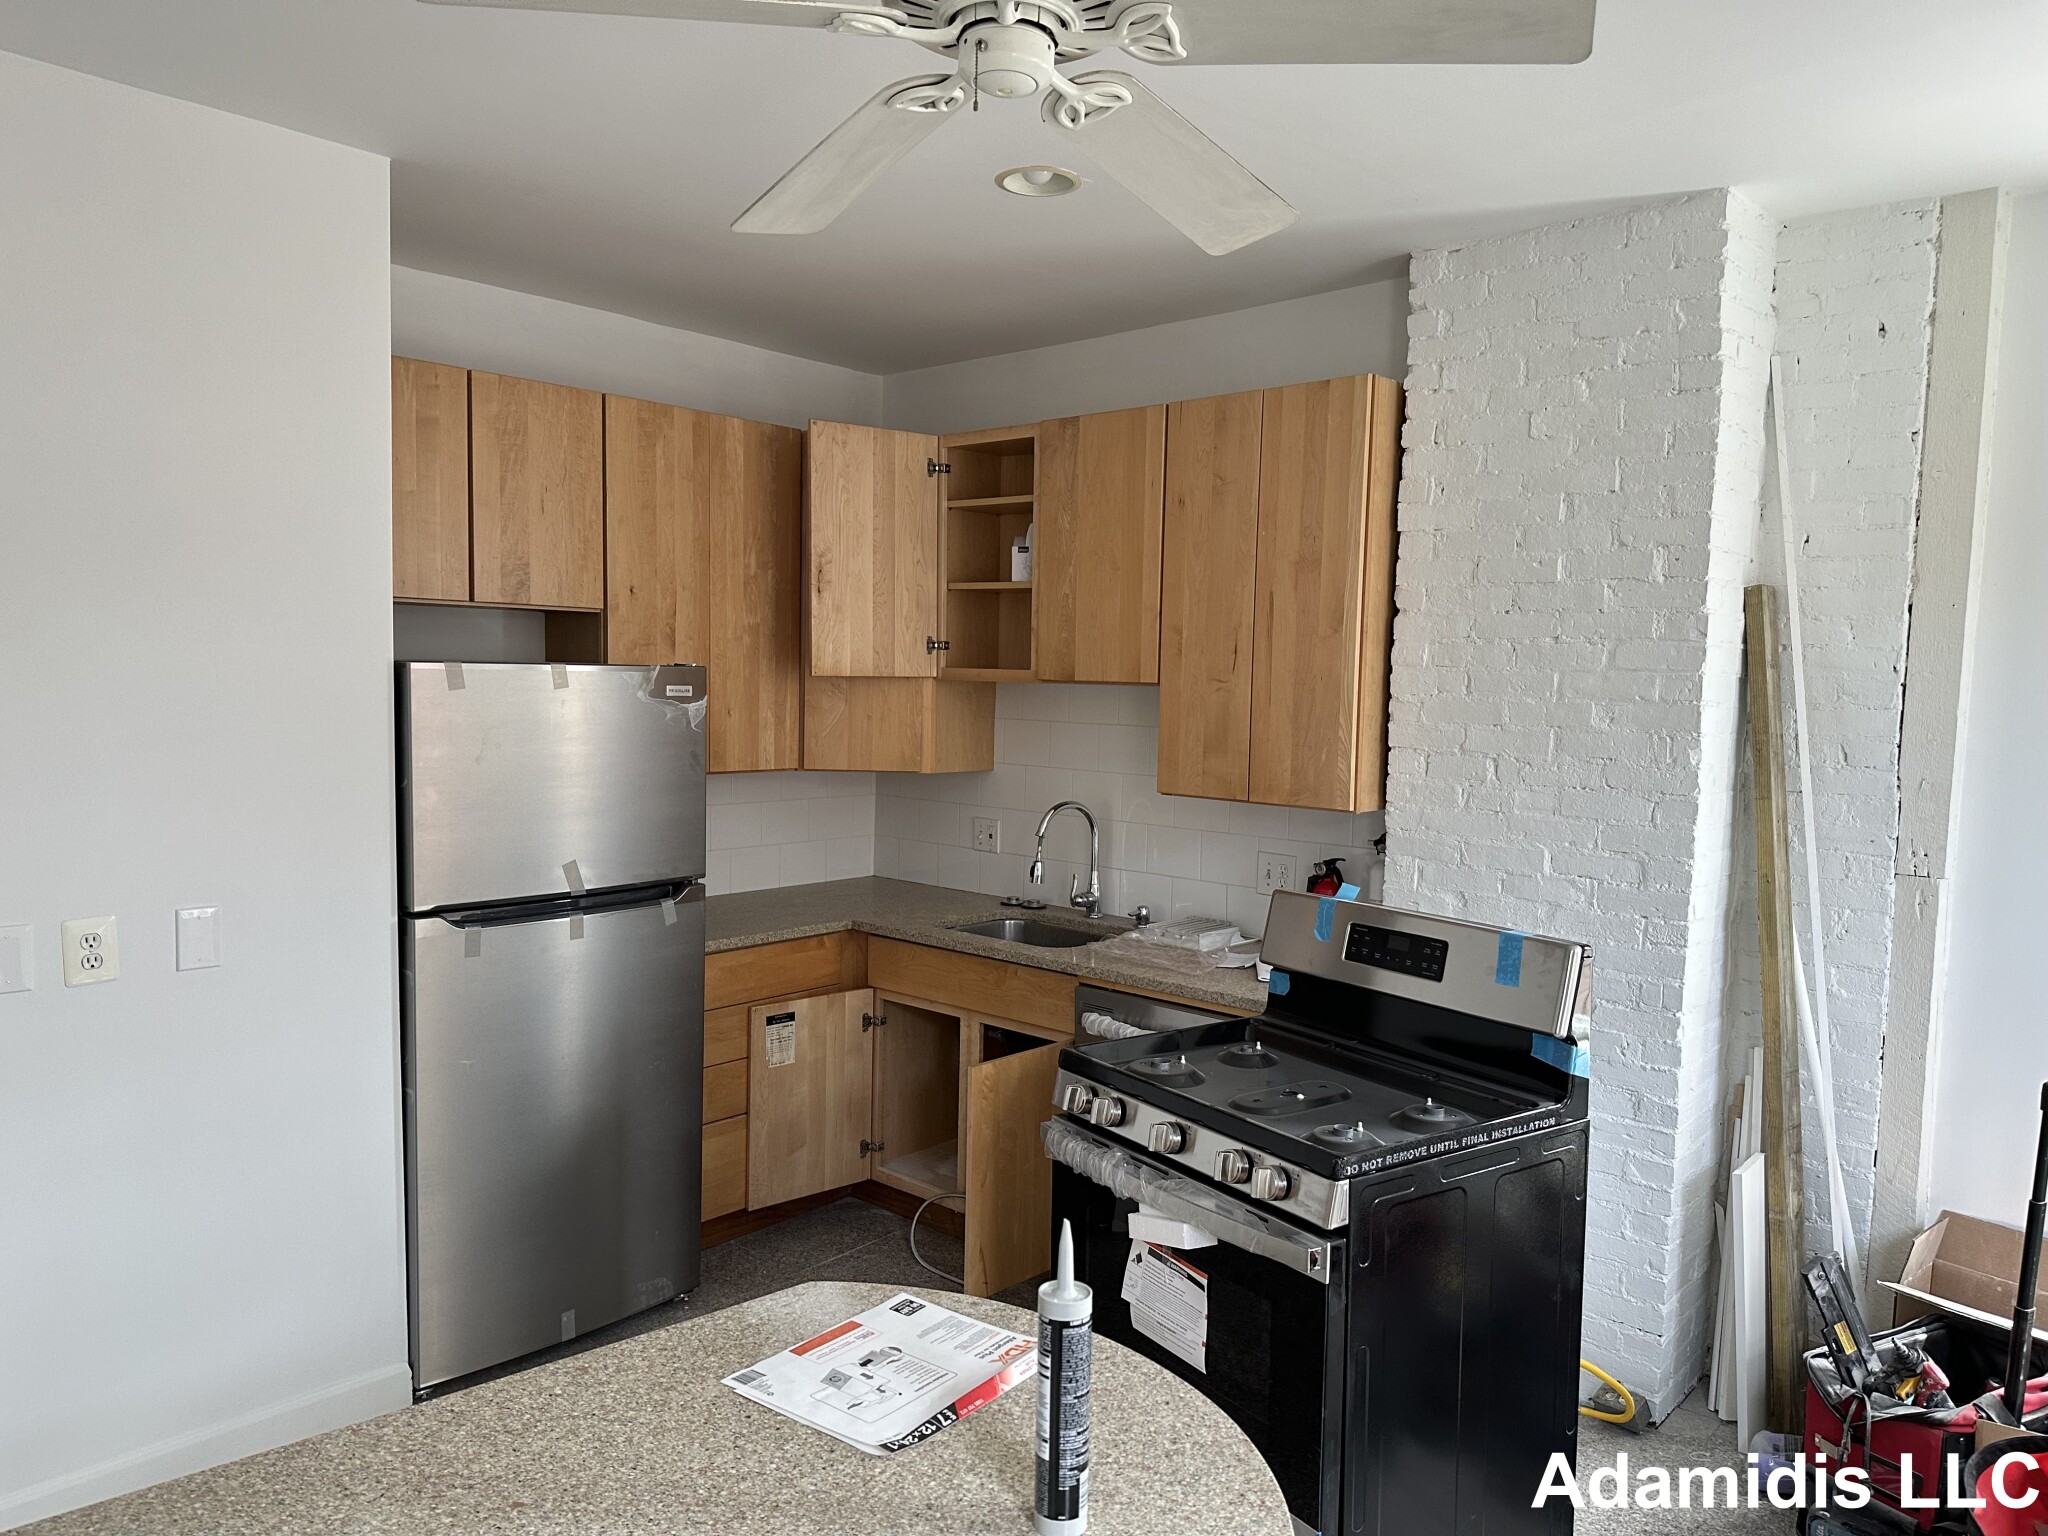 Photos of apartment on Rogers,Boston MA 02127